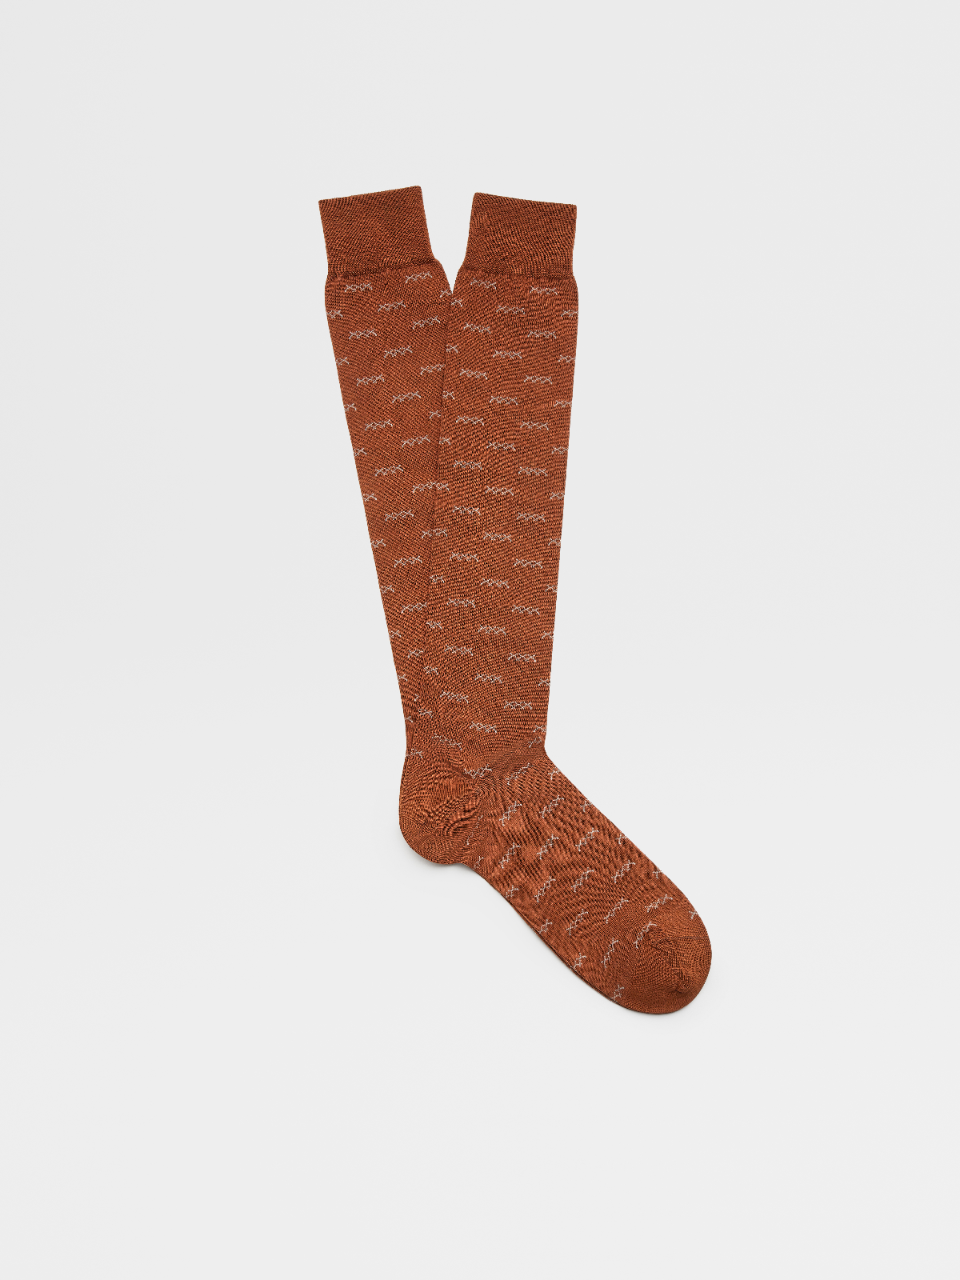 Vicuna Iconic Triple X Cotton Mid Calf Socks